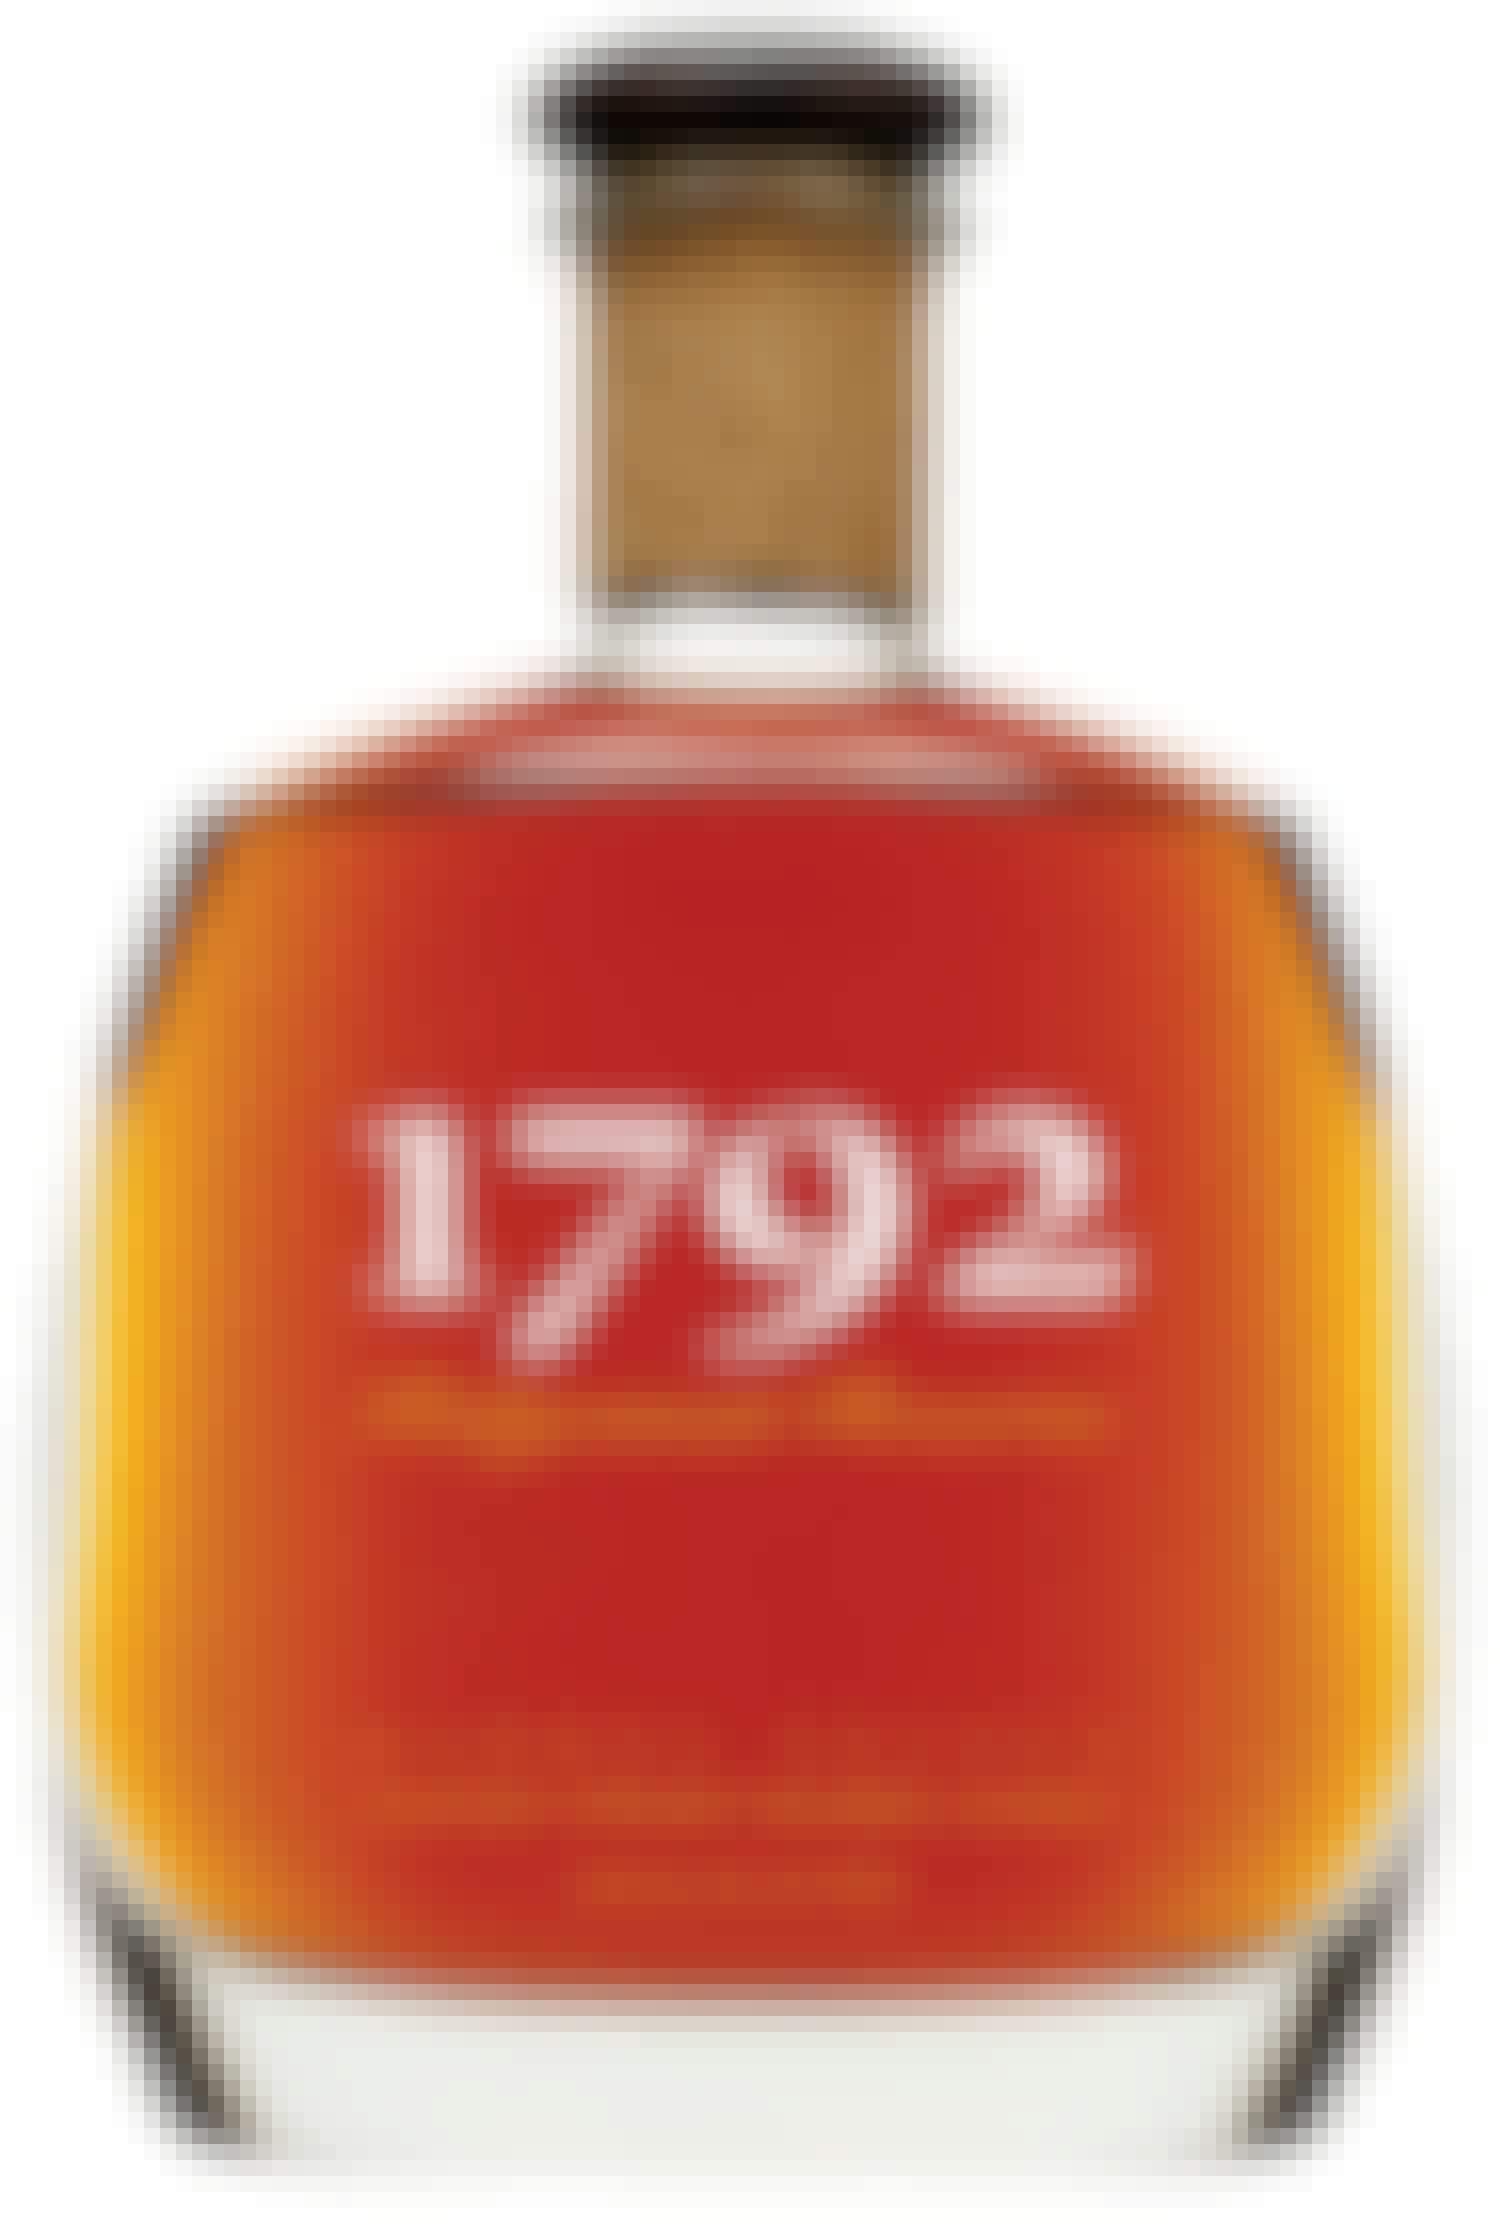 1792 Ridgemont Reserve Small Batch Bourbon 8 year old 750ml